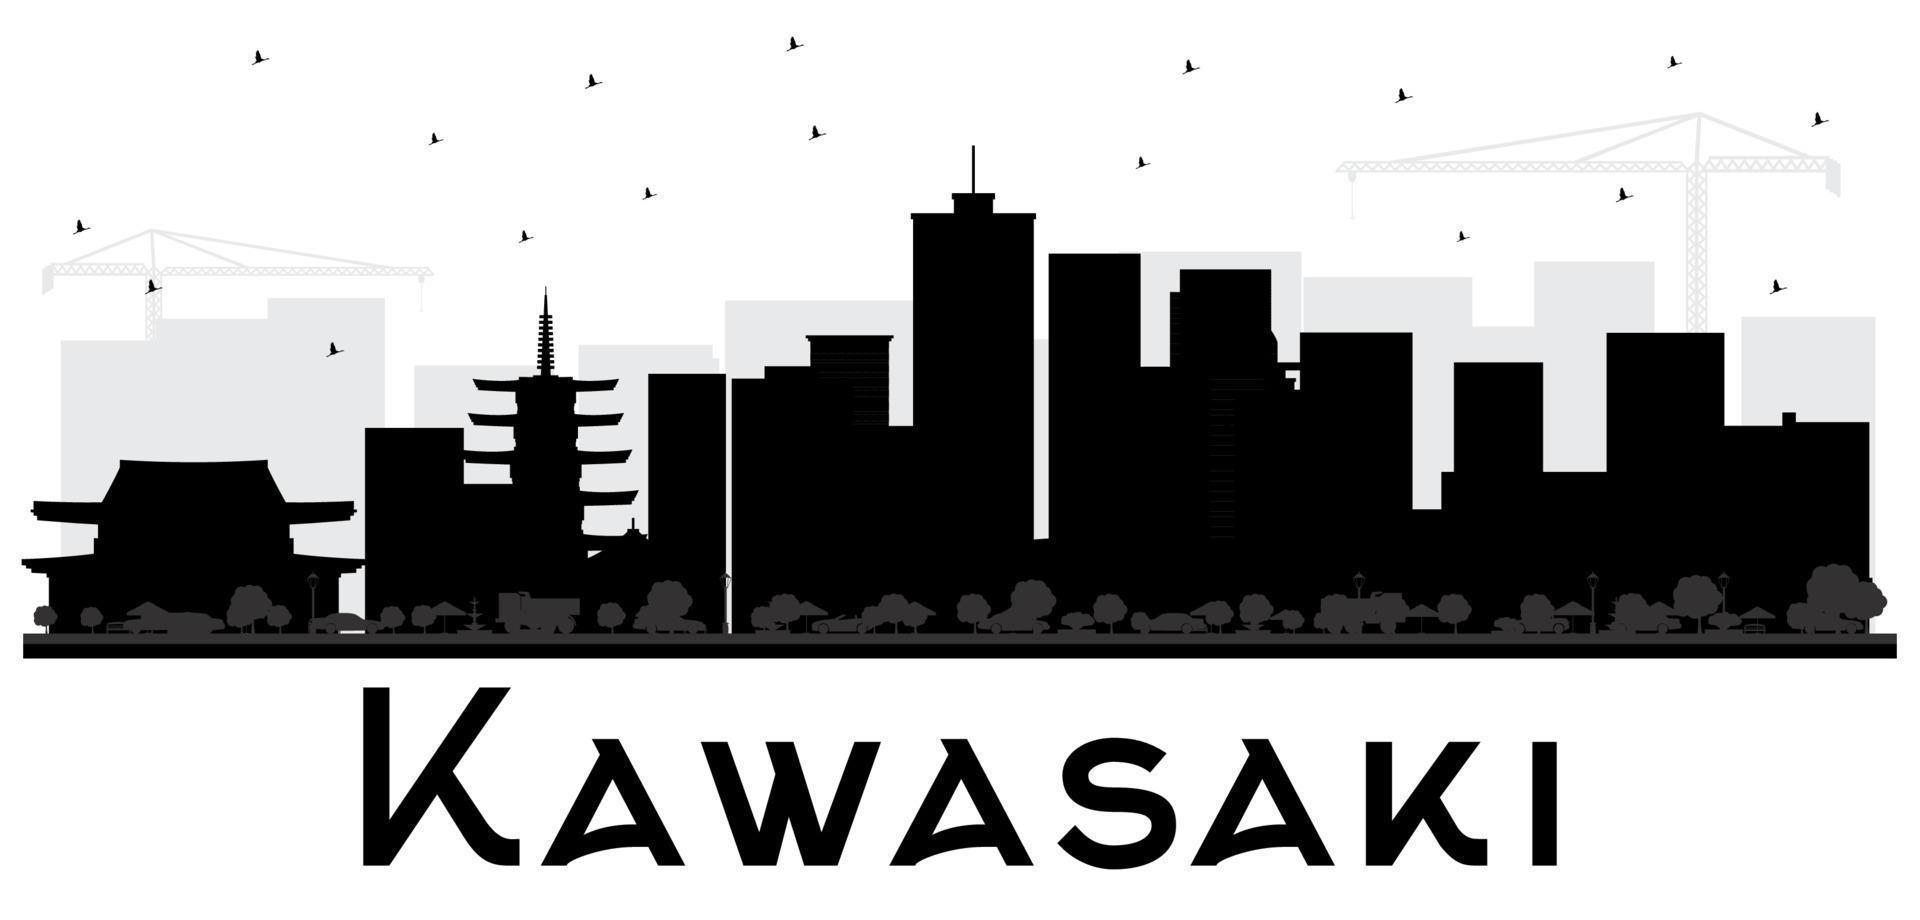 Kawasaki Japan City Skyline Black and White Silhouette. vector